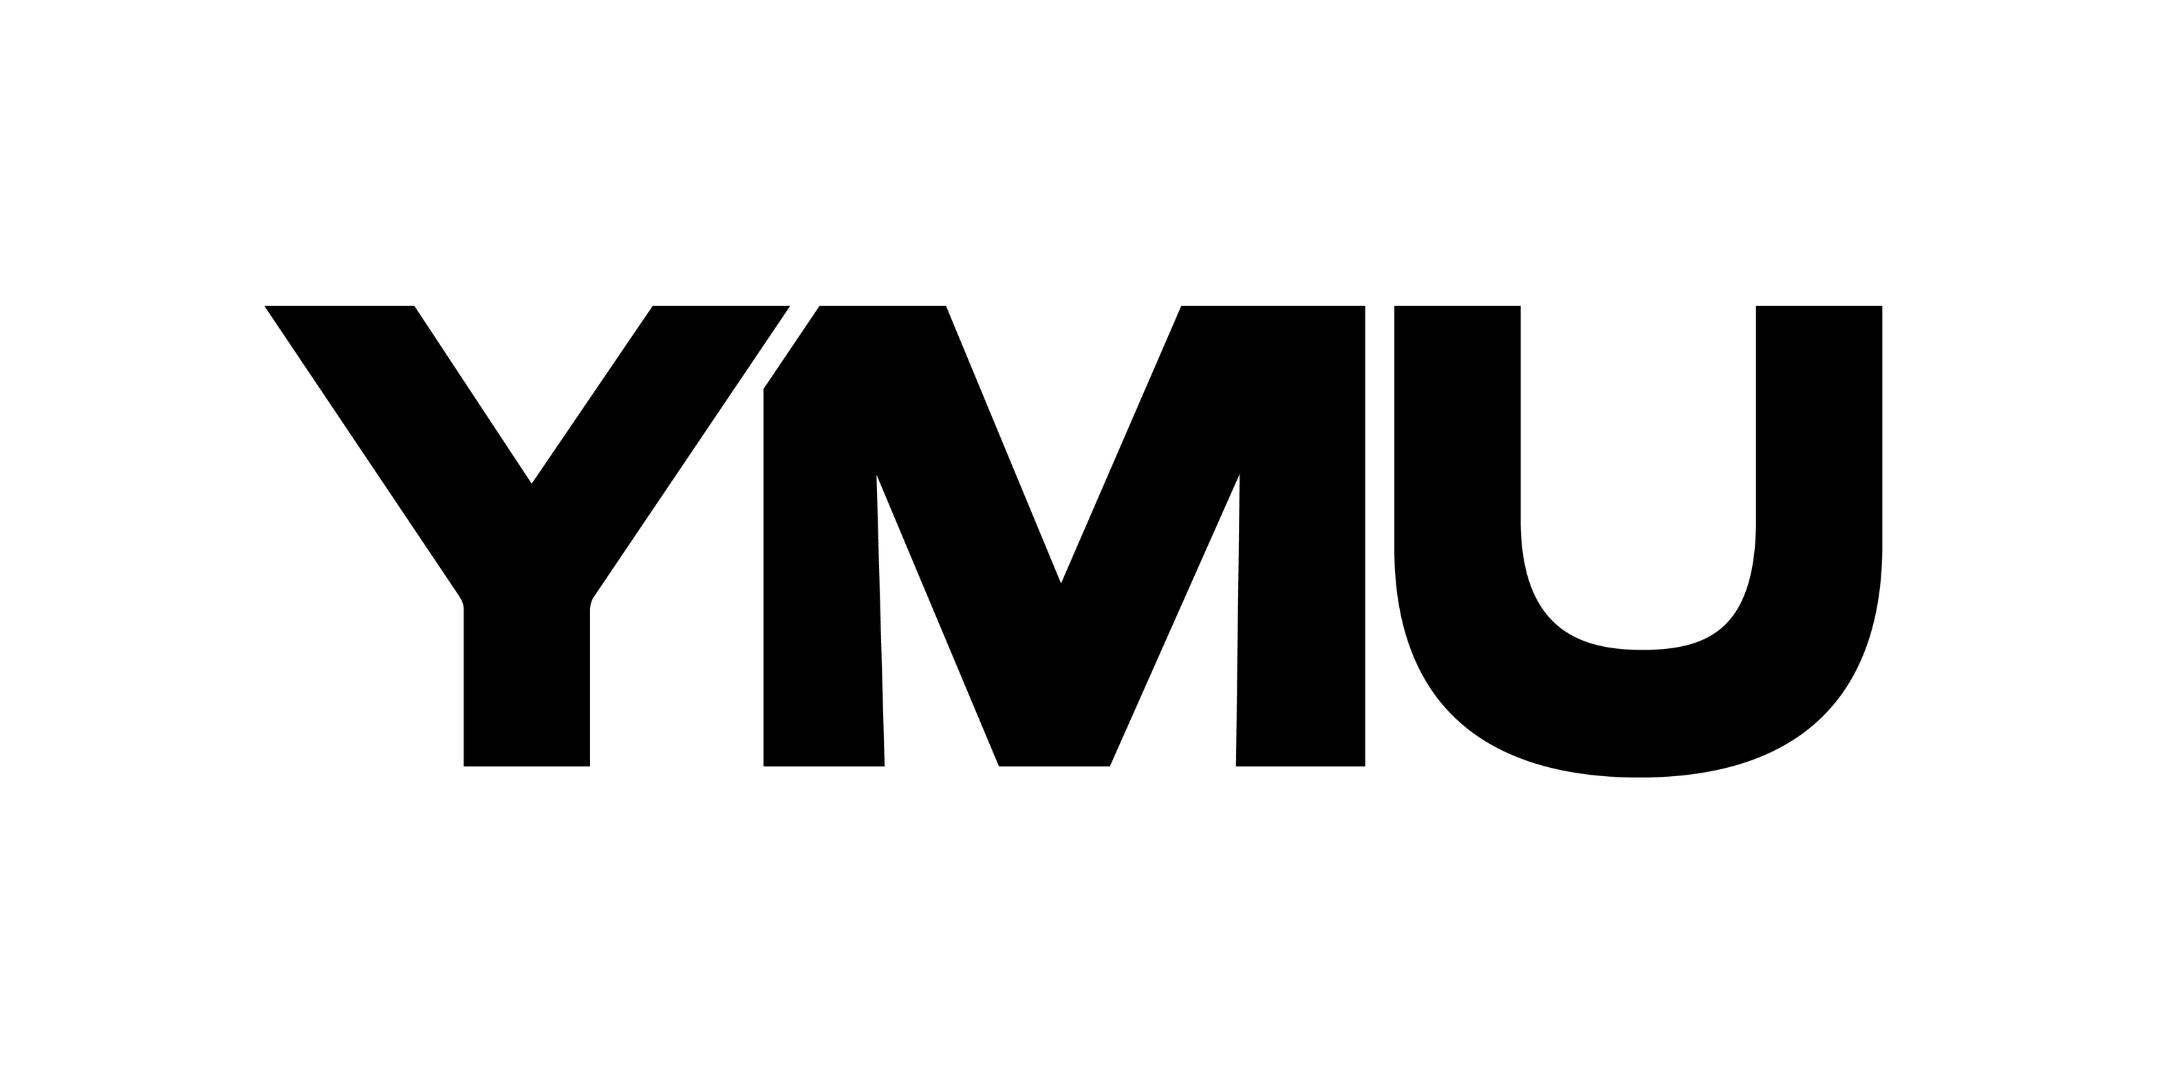 YMU Logo in black and white